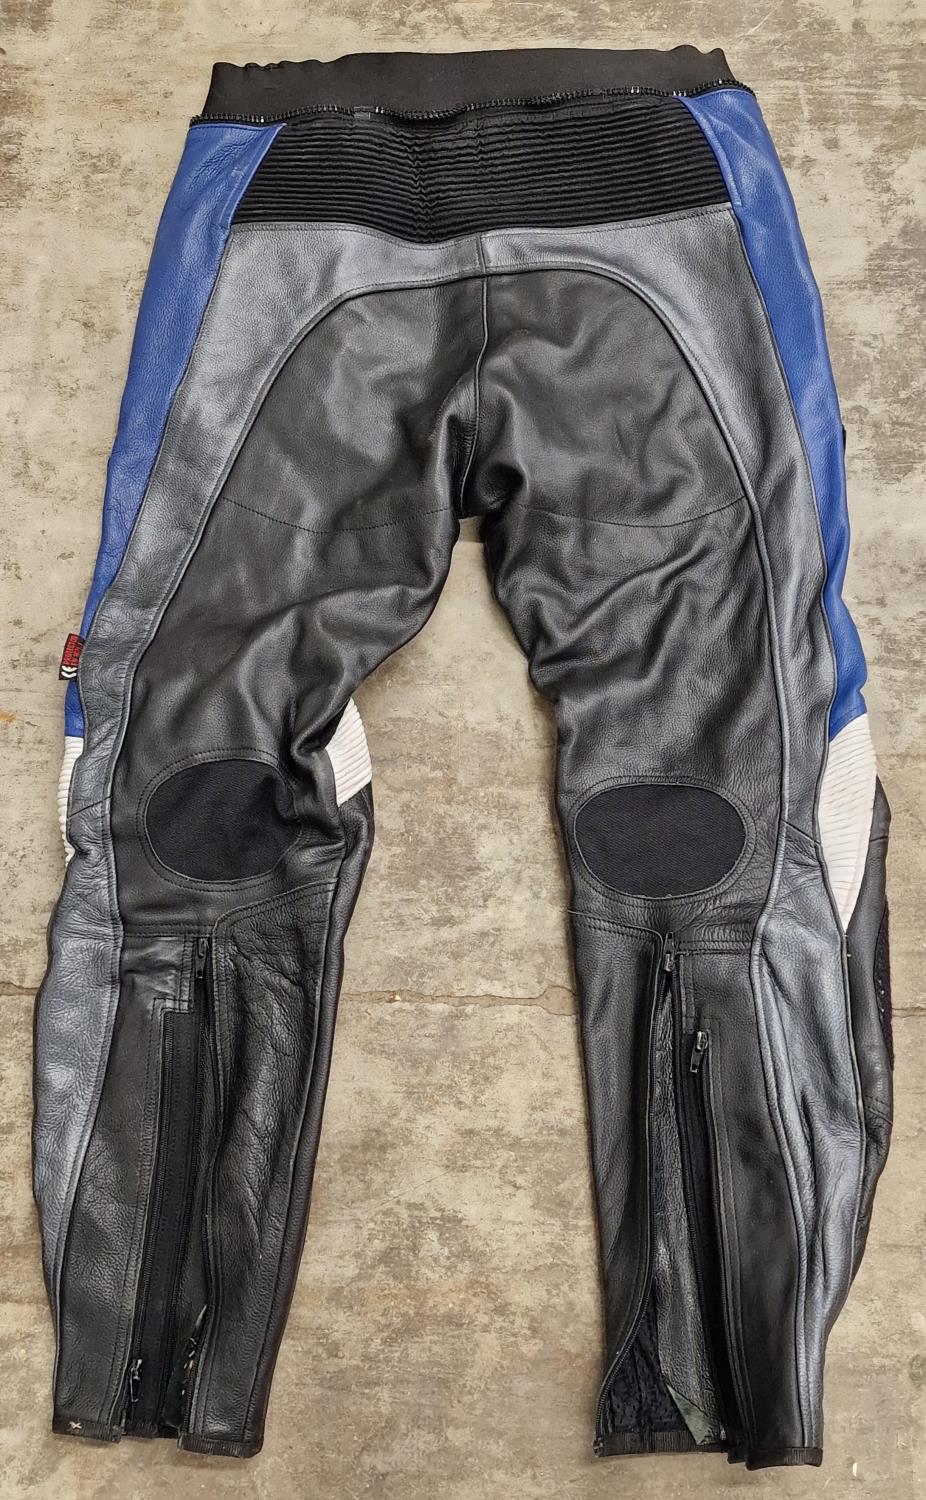 Targa Black/Blue/White leather motorcycle trousers waist size 34 (REF 20). - Image 2 of 2